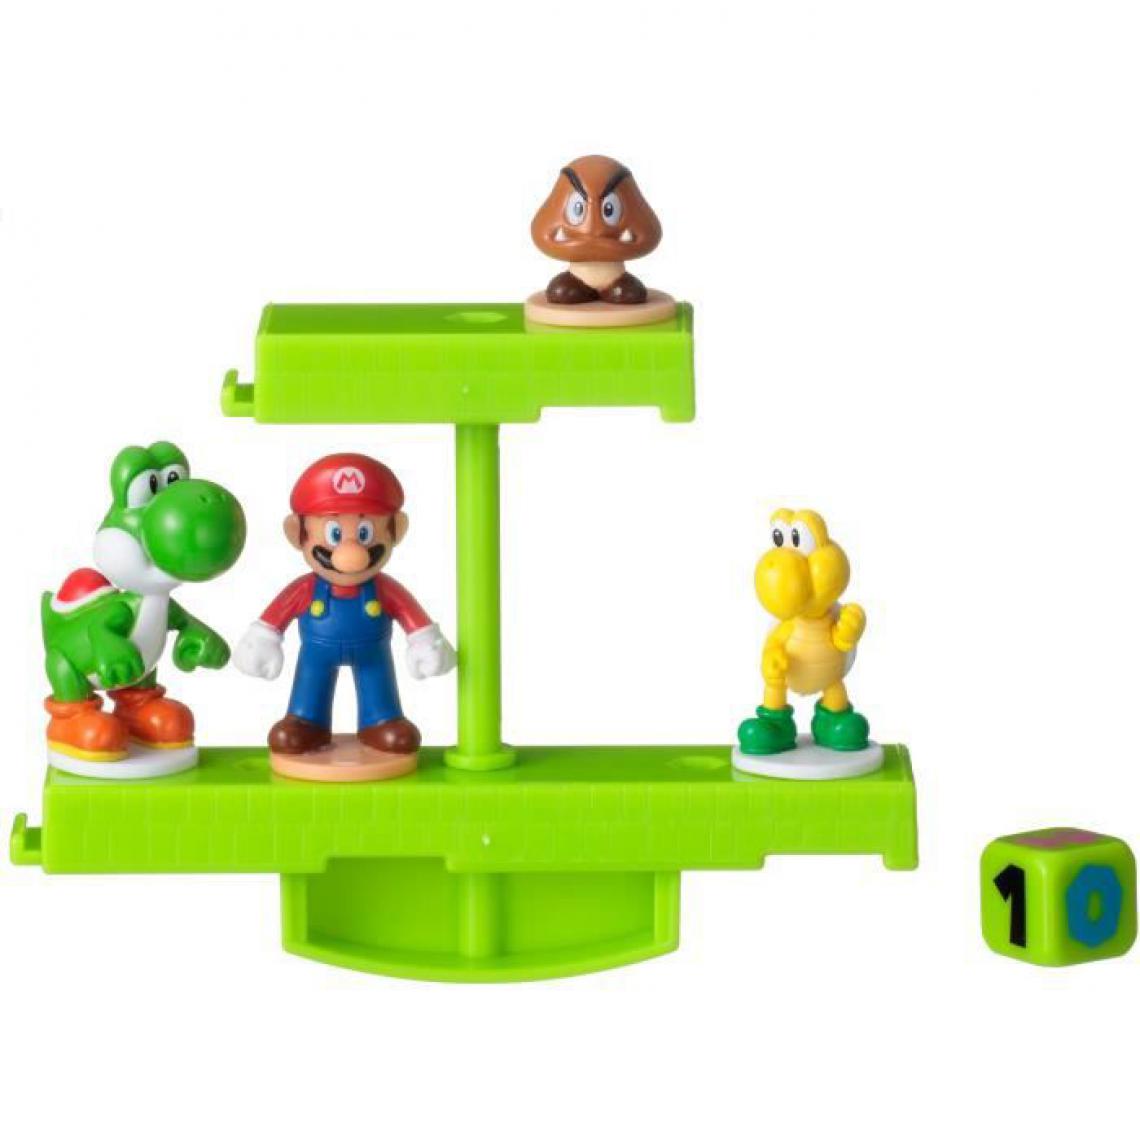 Icaverne - FIGURINE MINIATURE - PERSONNAGE MINIATURE - 7358 - Super Mario Balancing Game Mario/Yoshi - Films et séries